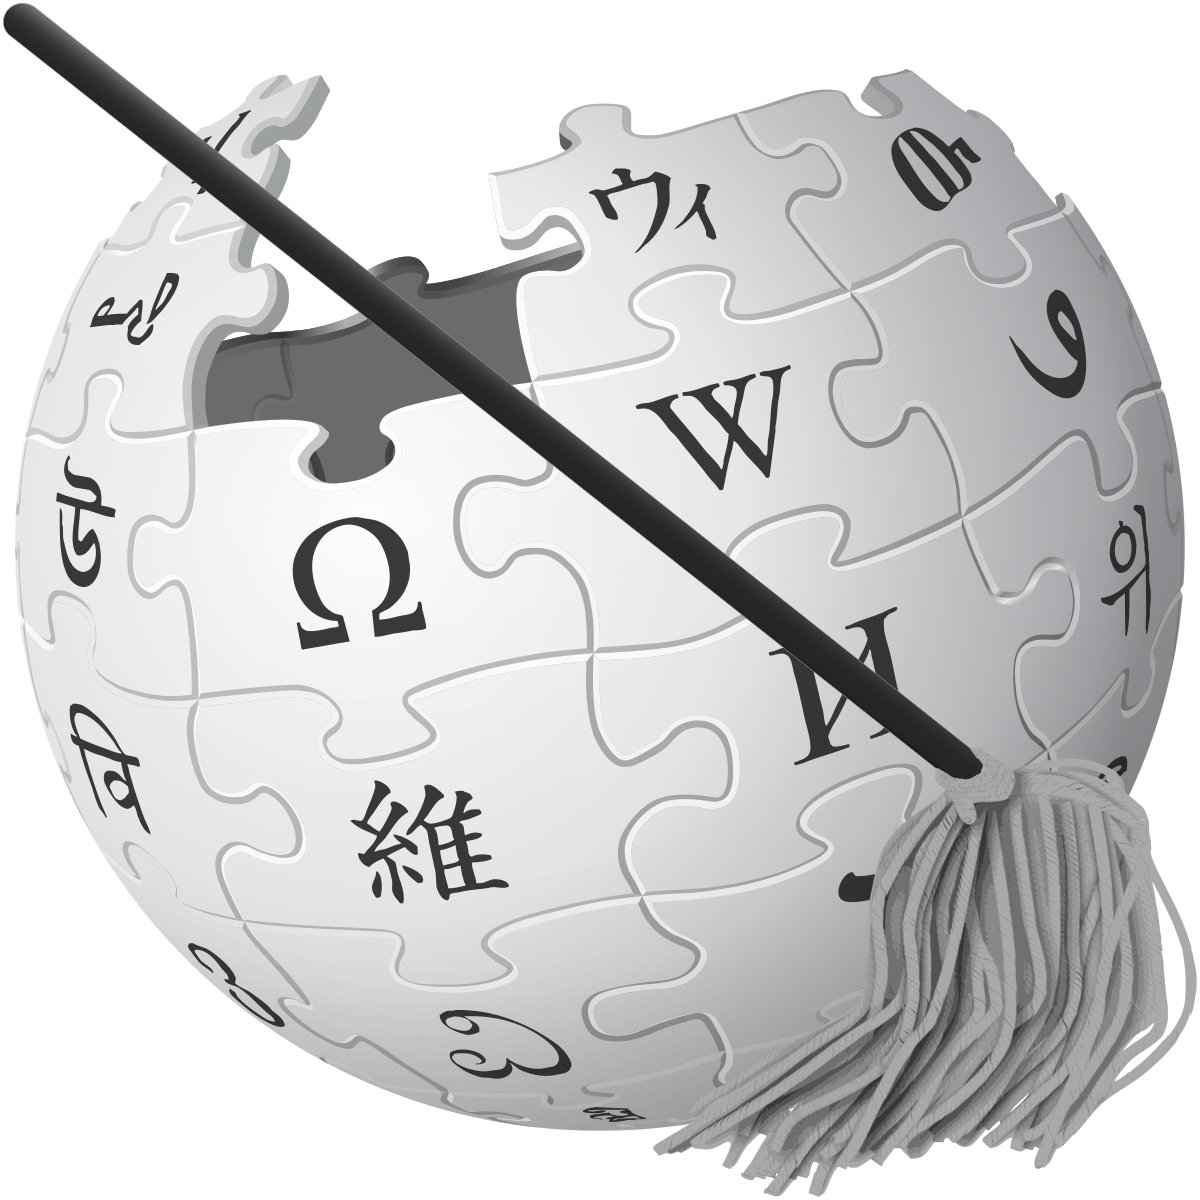 Wikipedia Now Censored in Rus